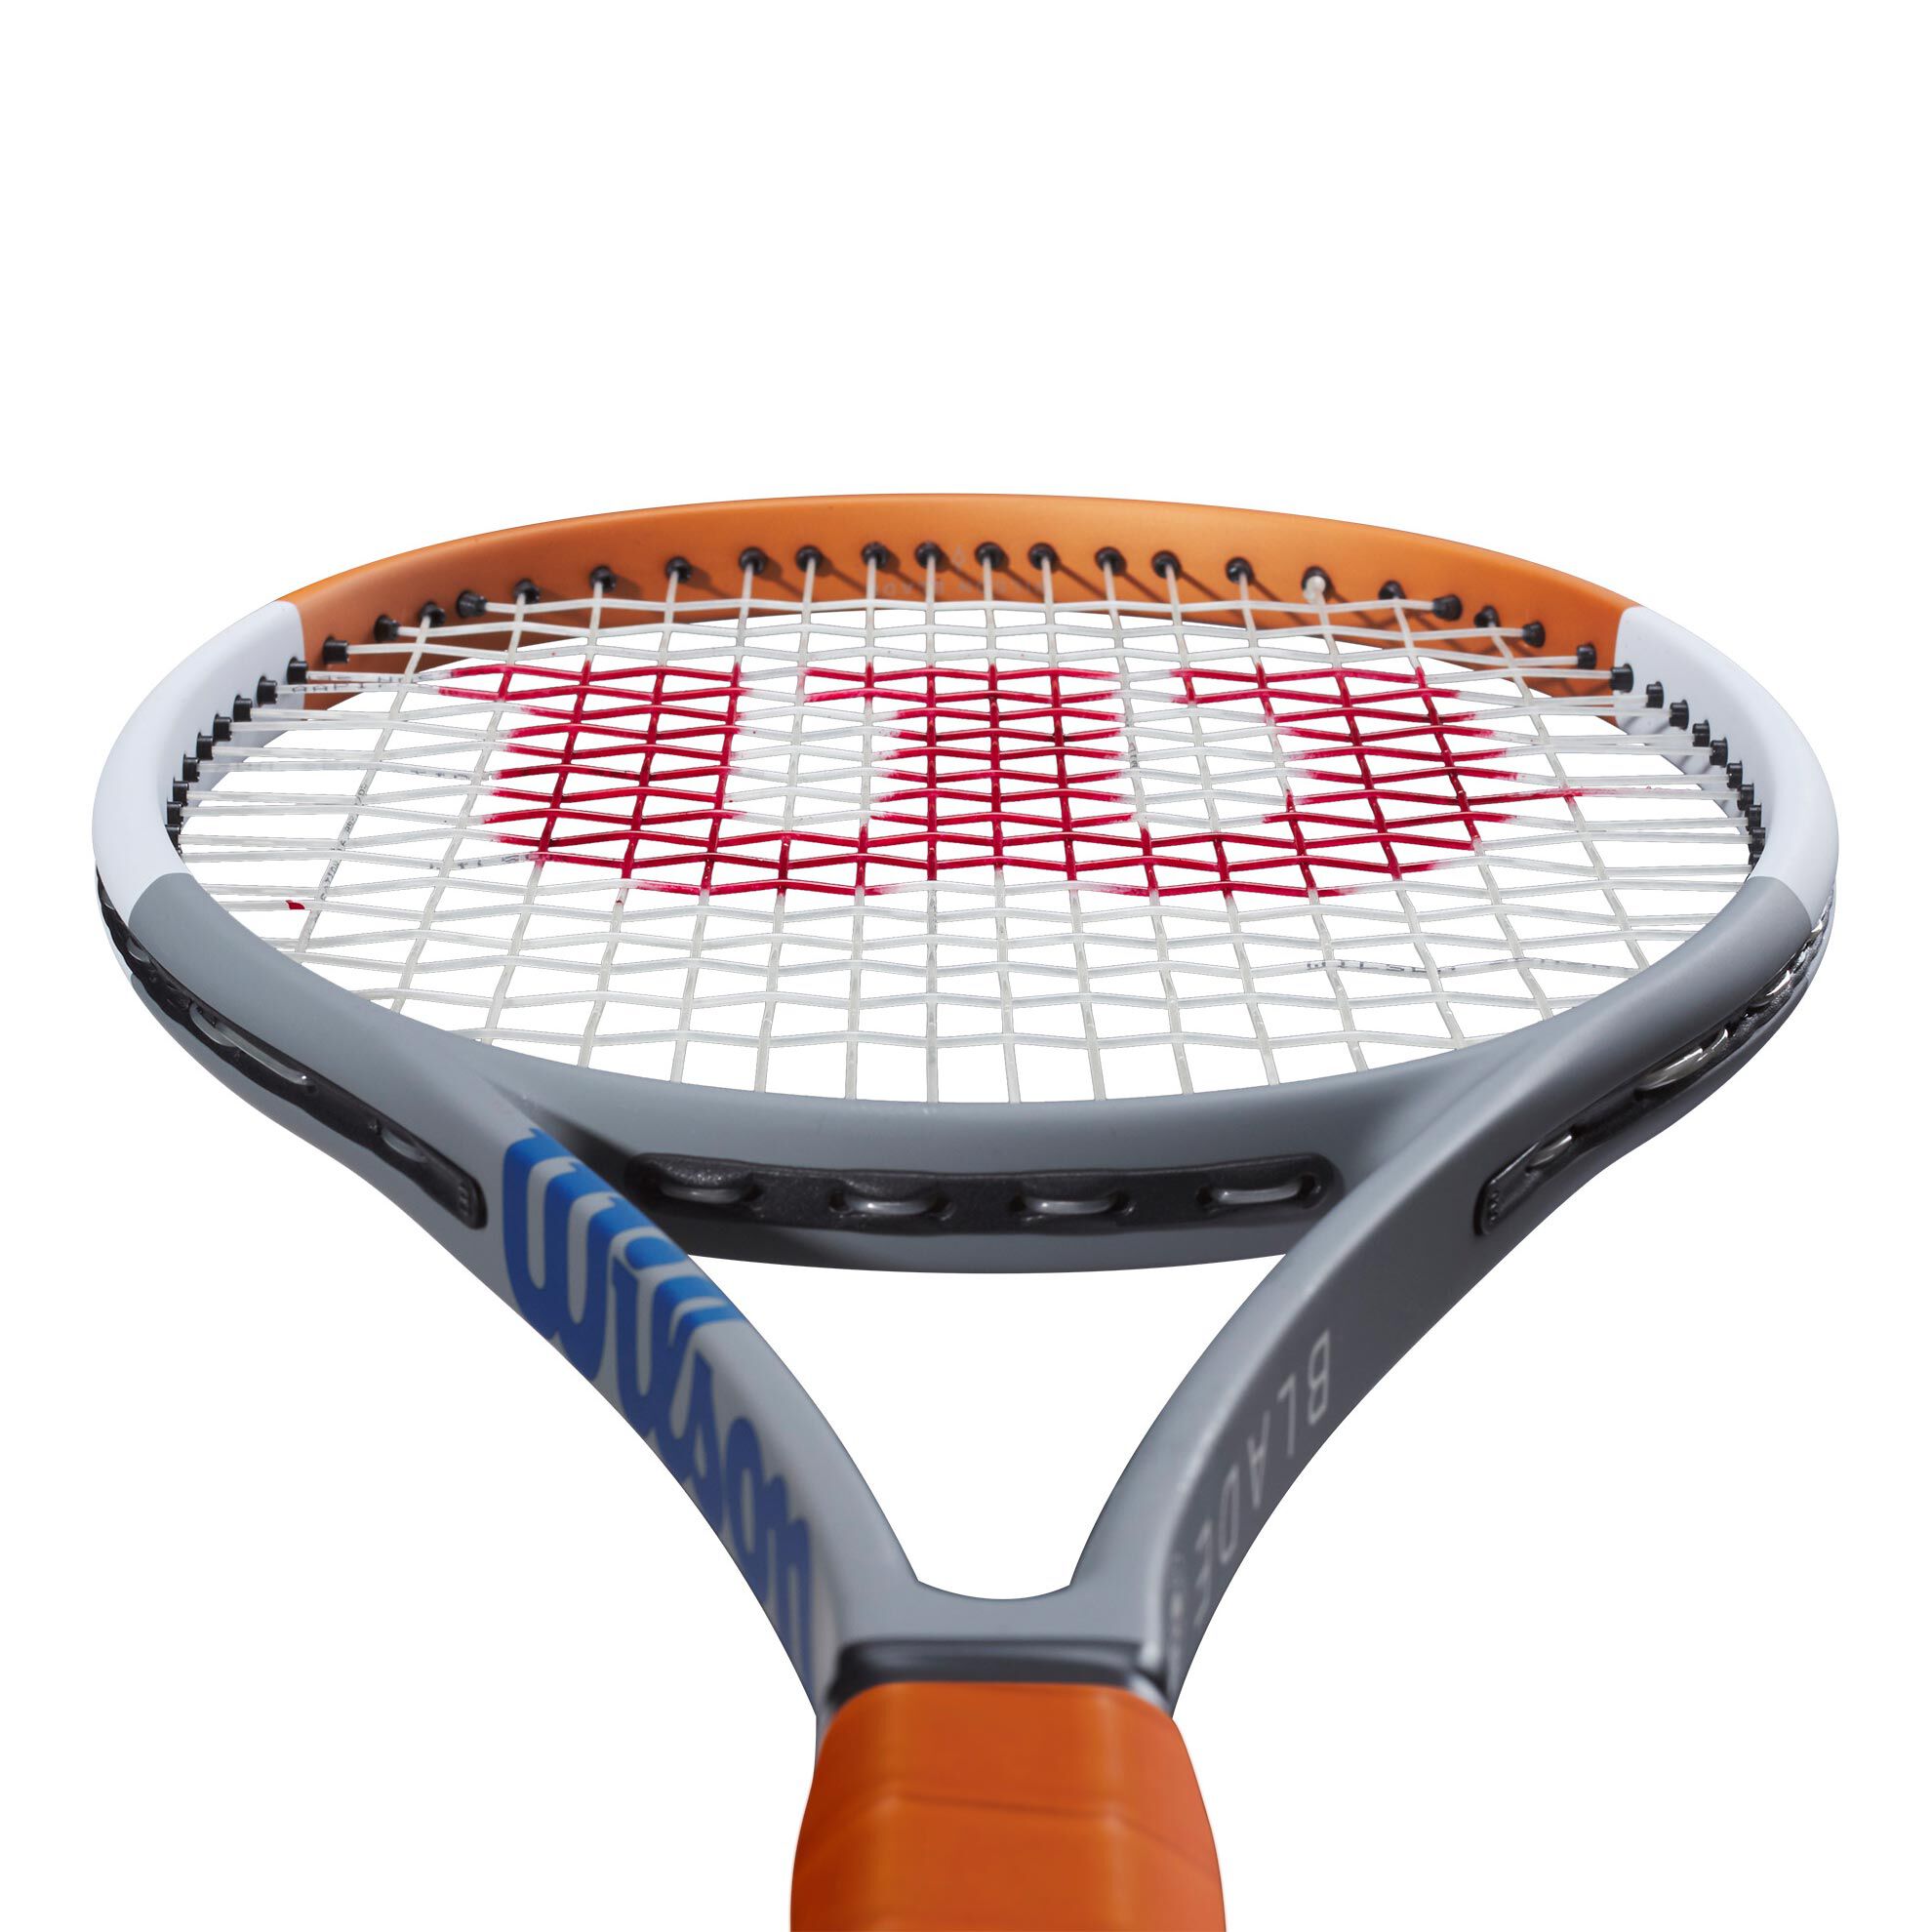 Buy Wilson Roland Garros Blade 98 LTD V7.0 Tour Racket online